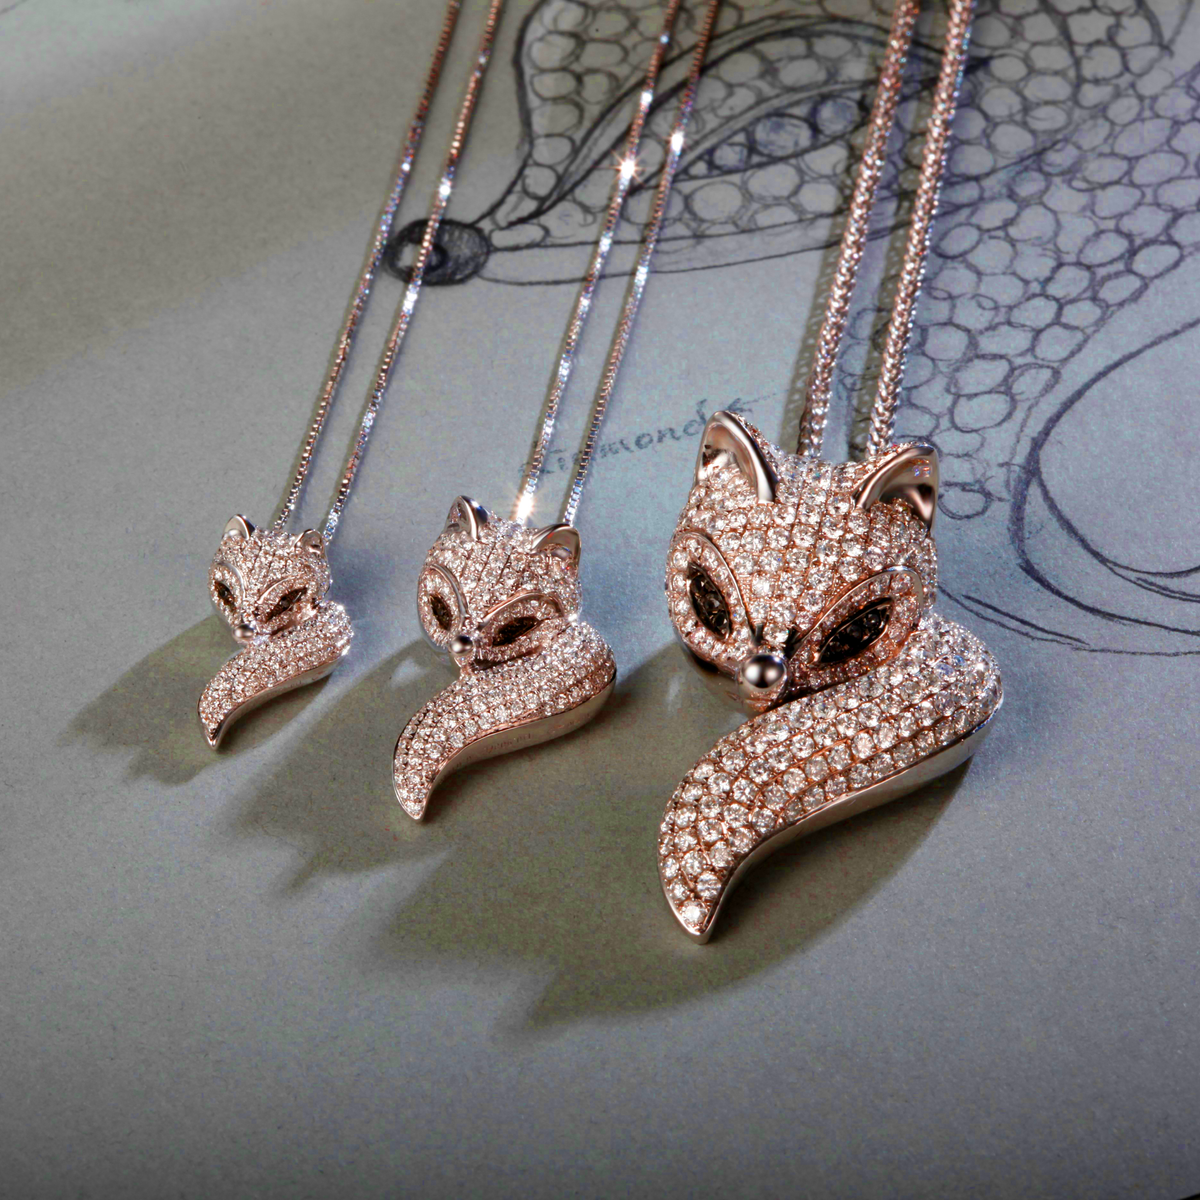 Arctic Fox Pendant Necklace